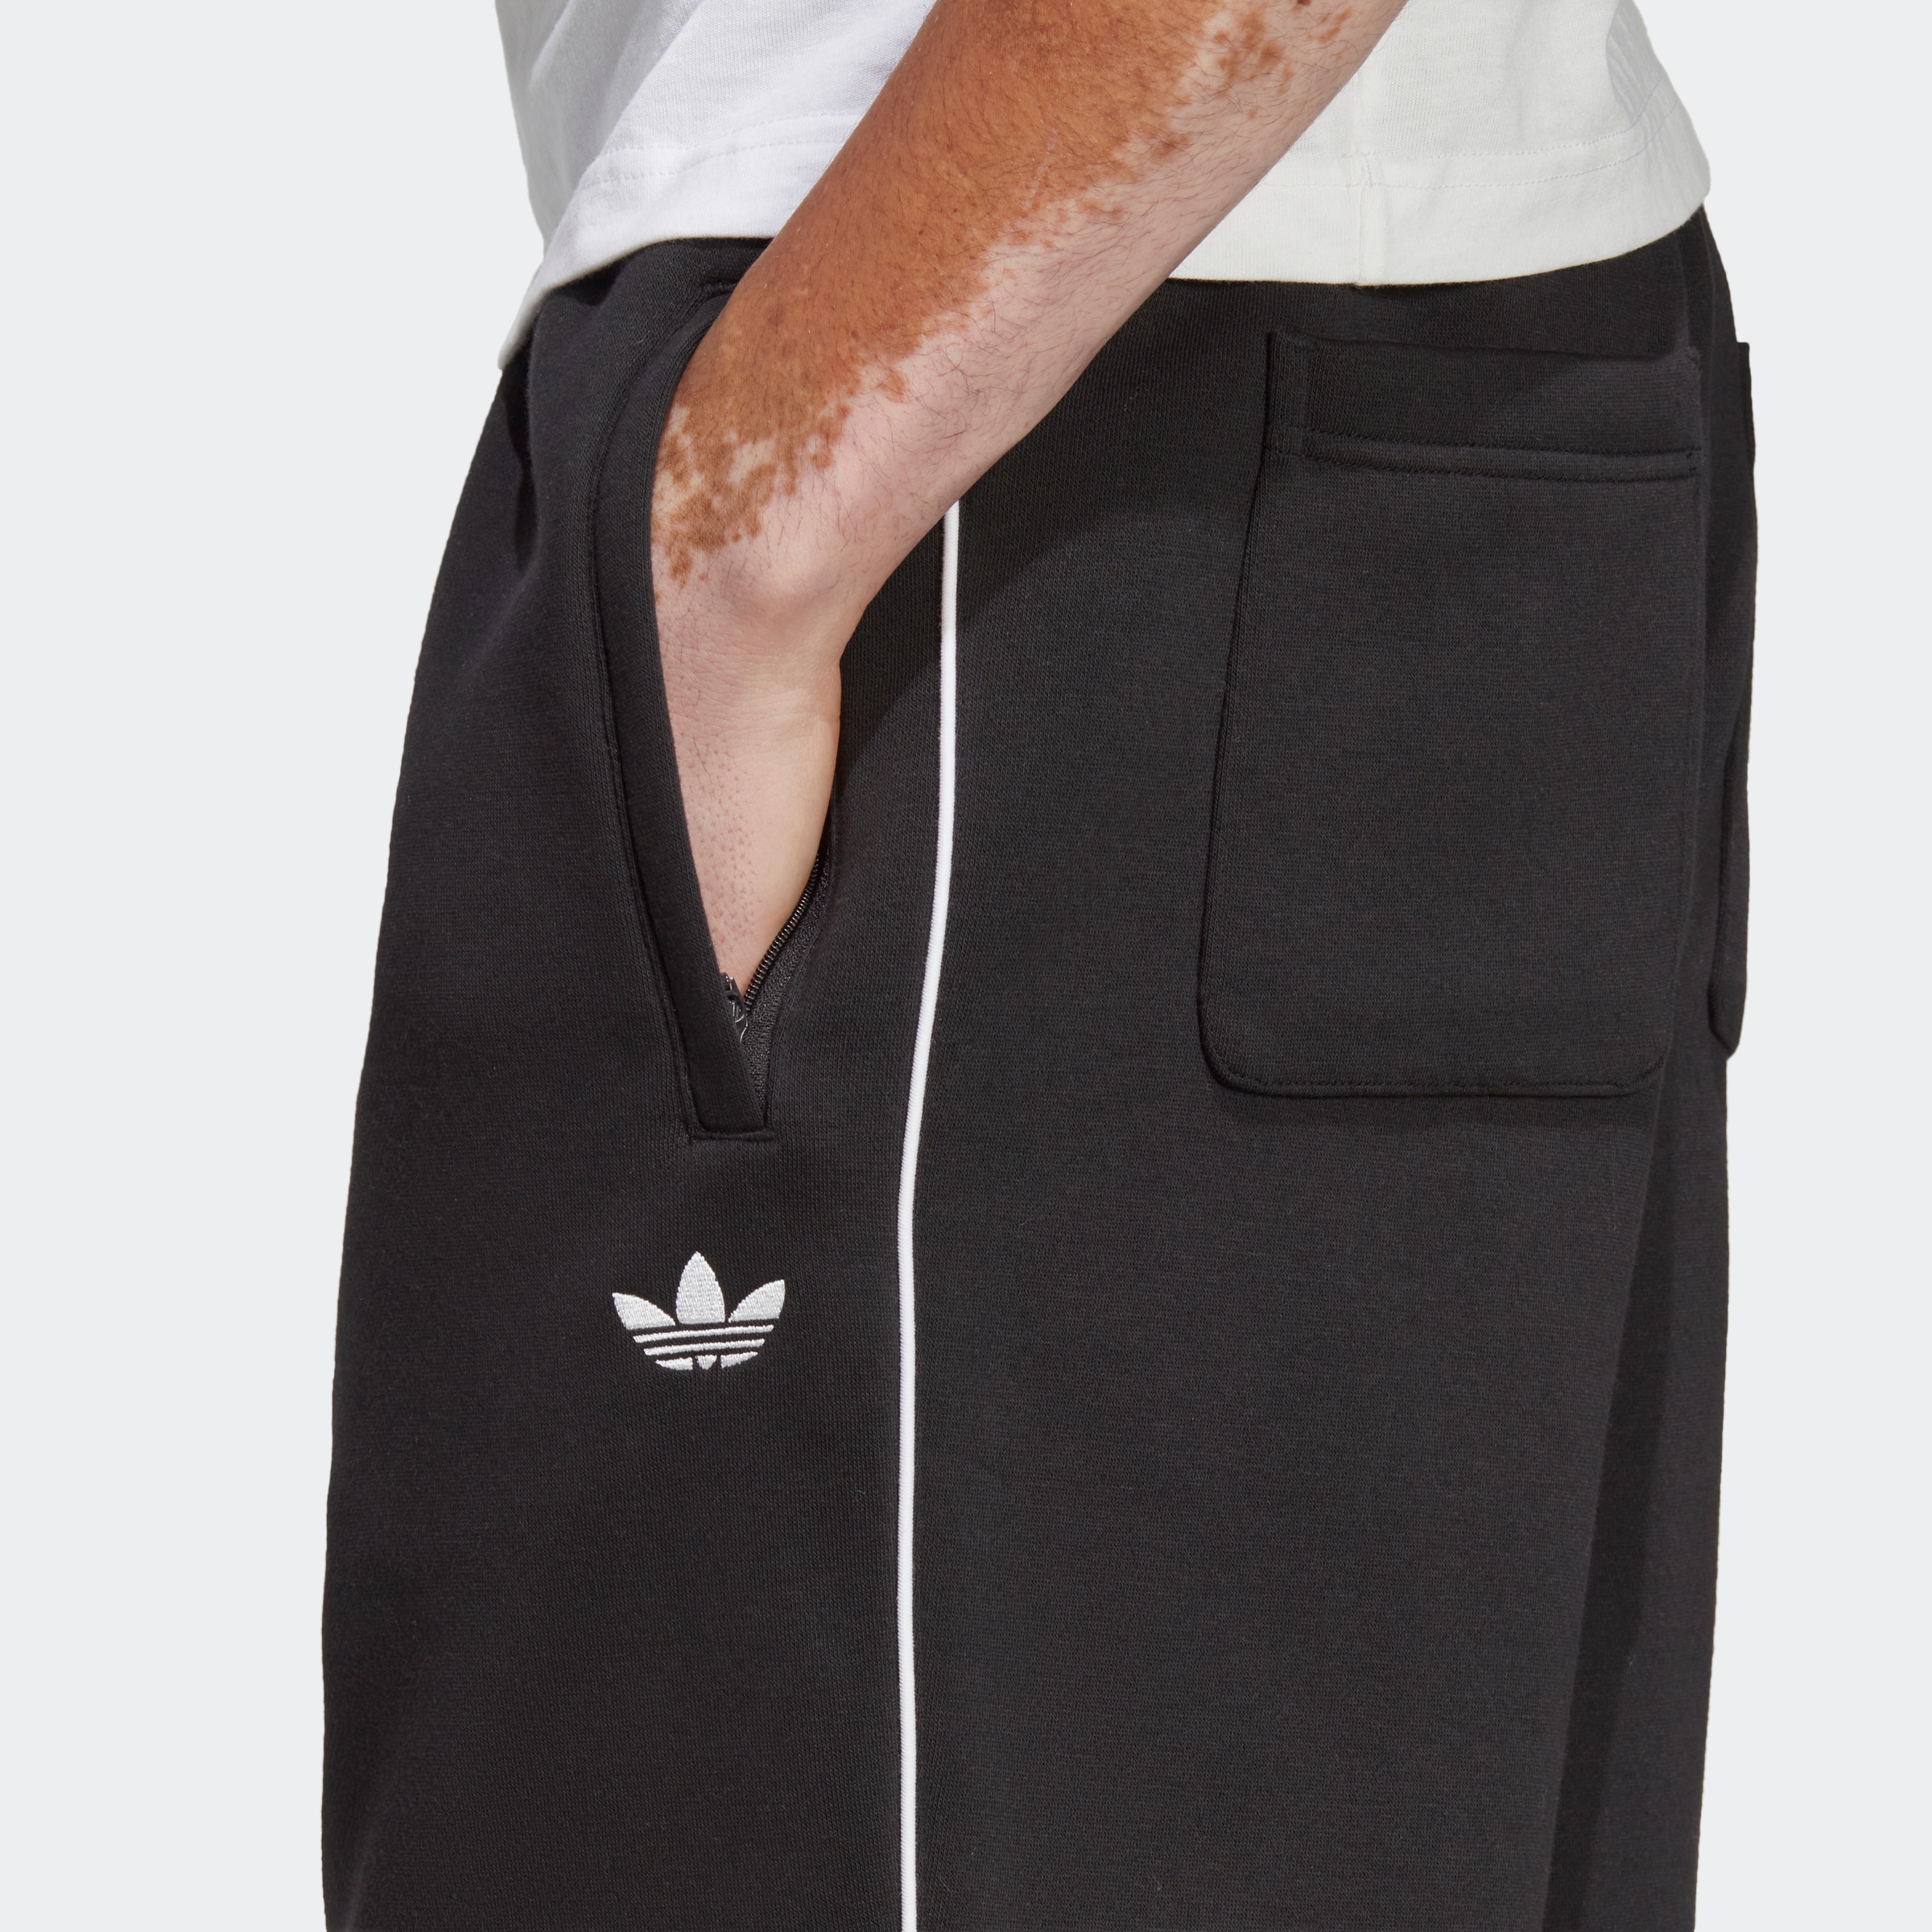 adidas Originals Shorts SEASONAL »ADICOLOR online (1 OTTO ARCHIVE«, tlg.) bei shoppen